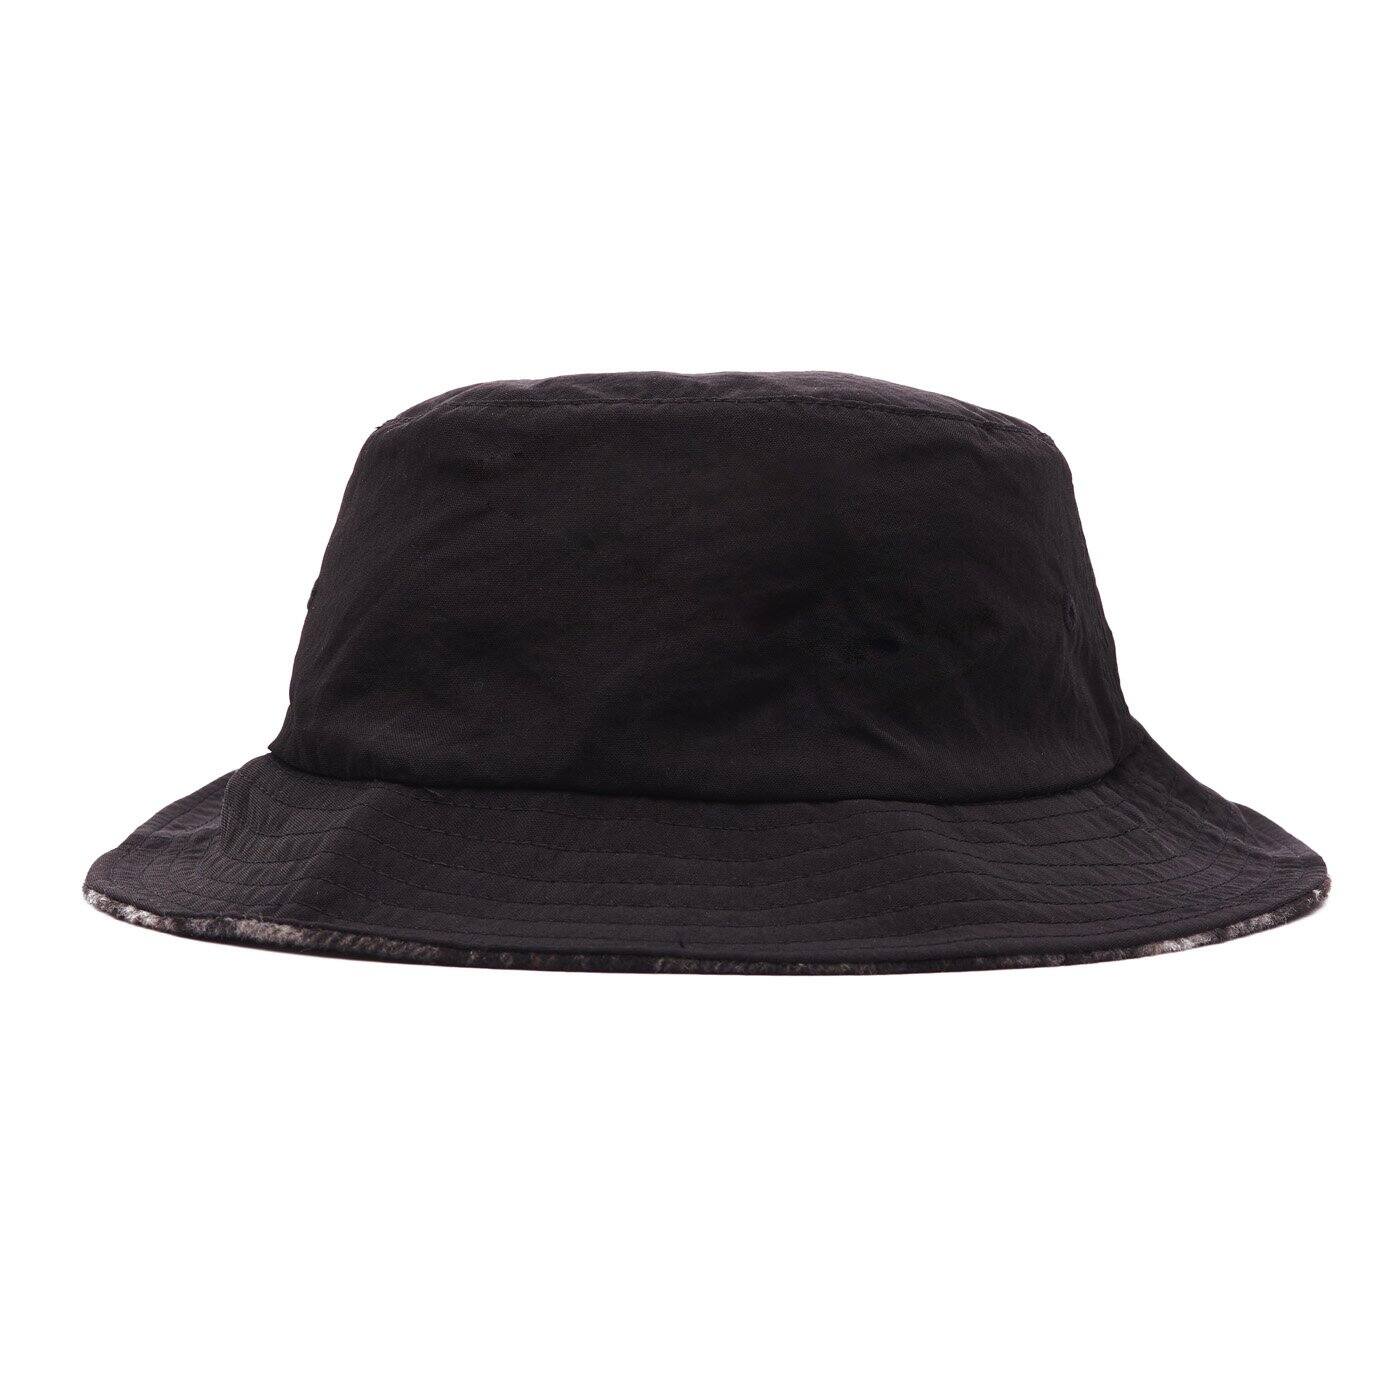 OBEY - Sam Reversible Bucket Hat, Black Multi